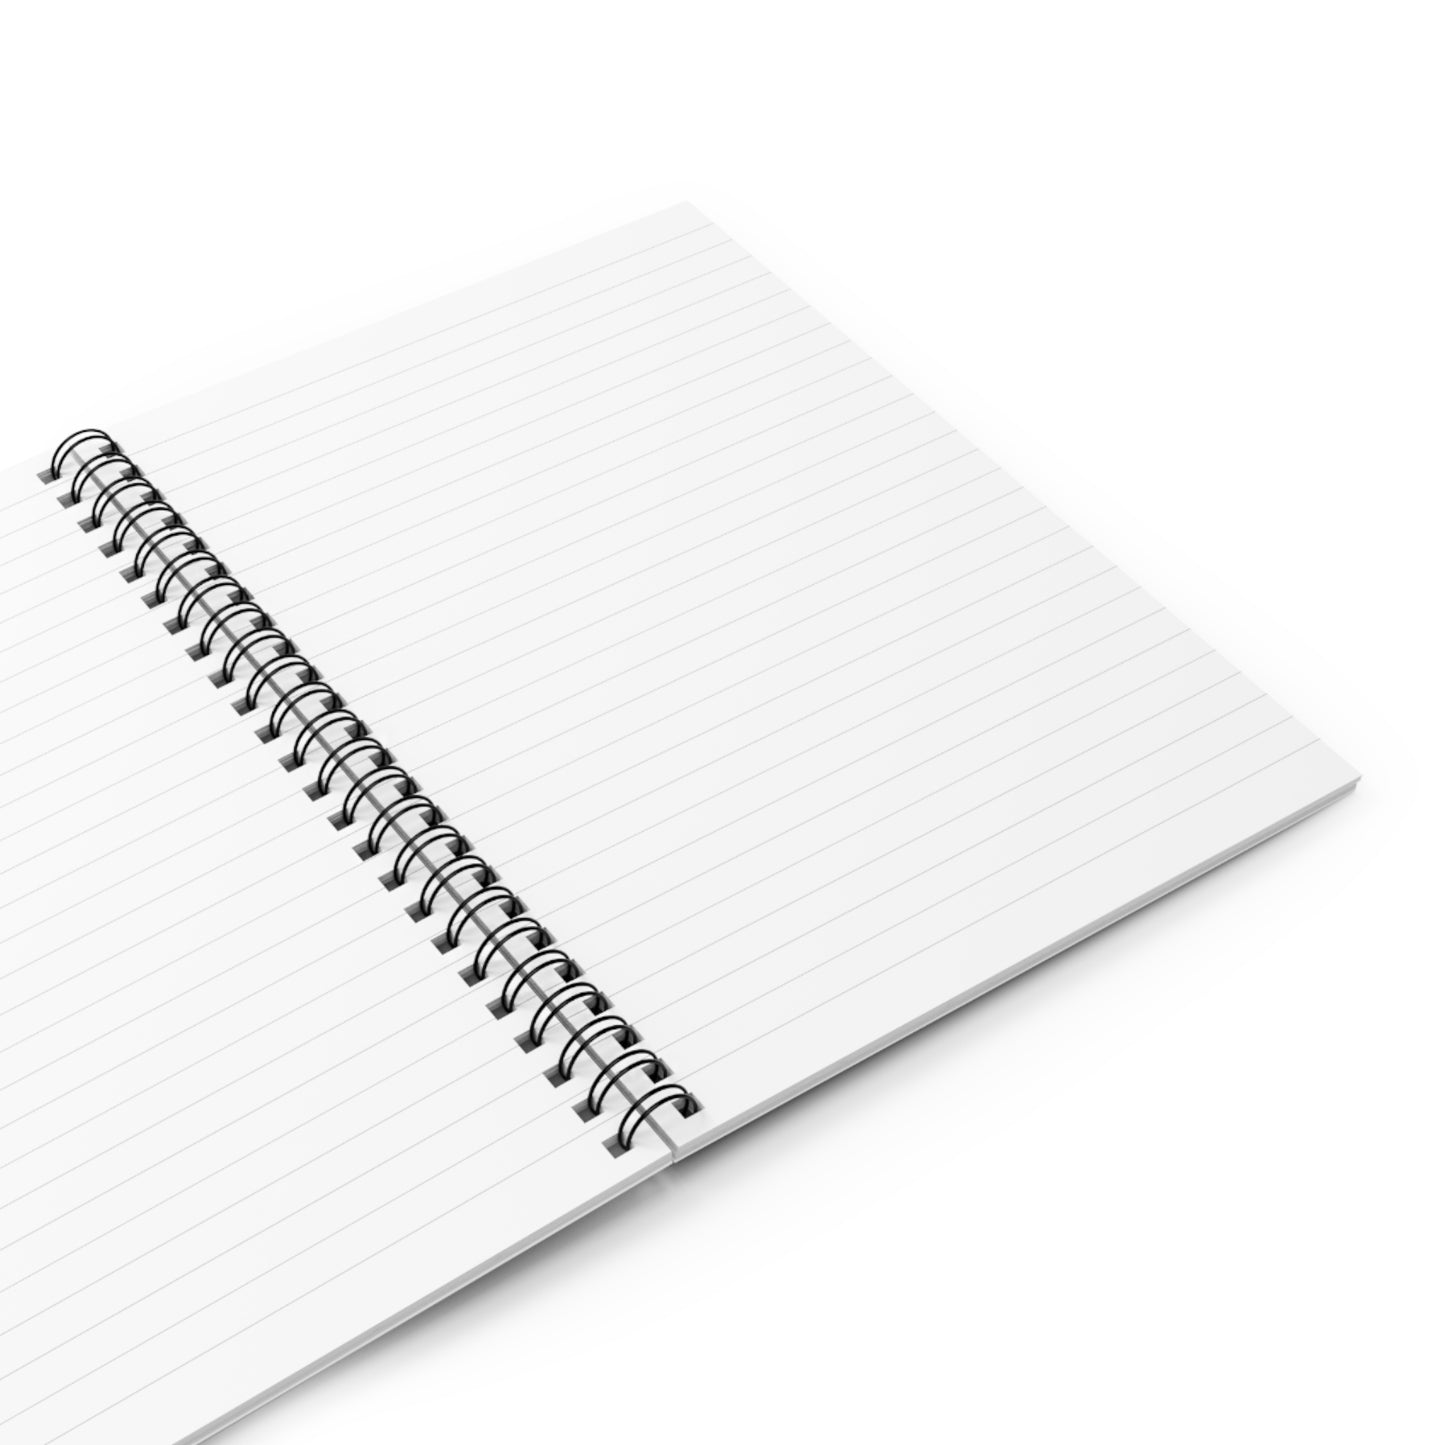 How I Got Over Journal Notebook